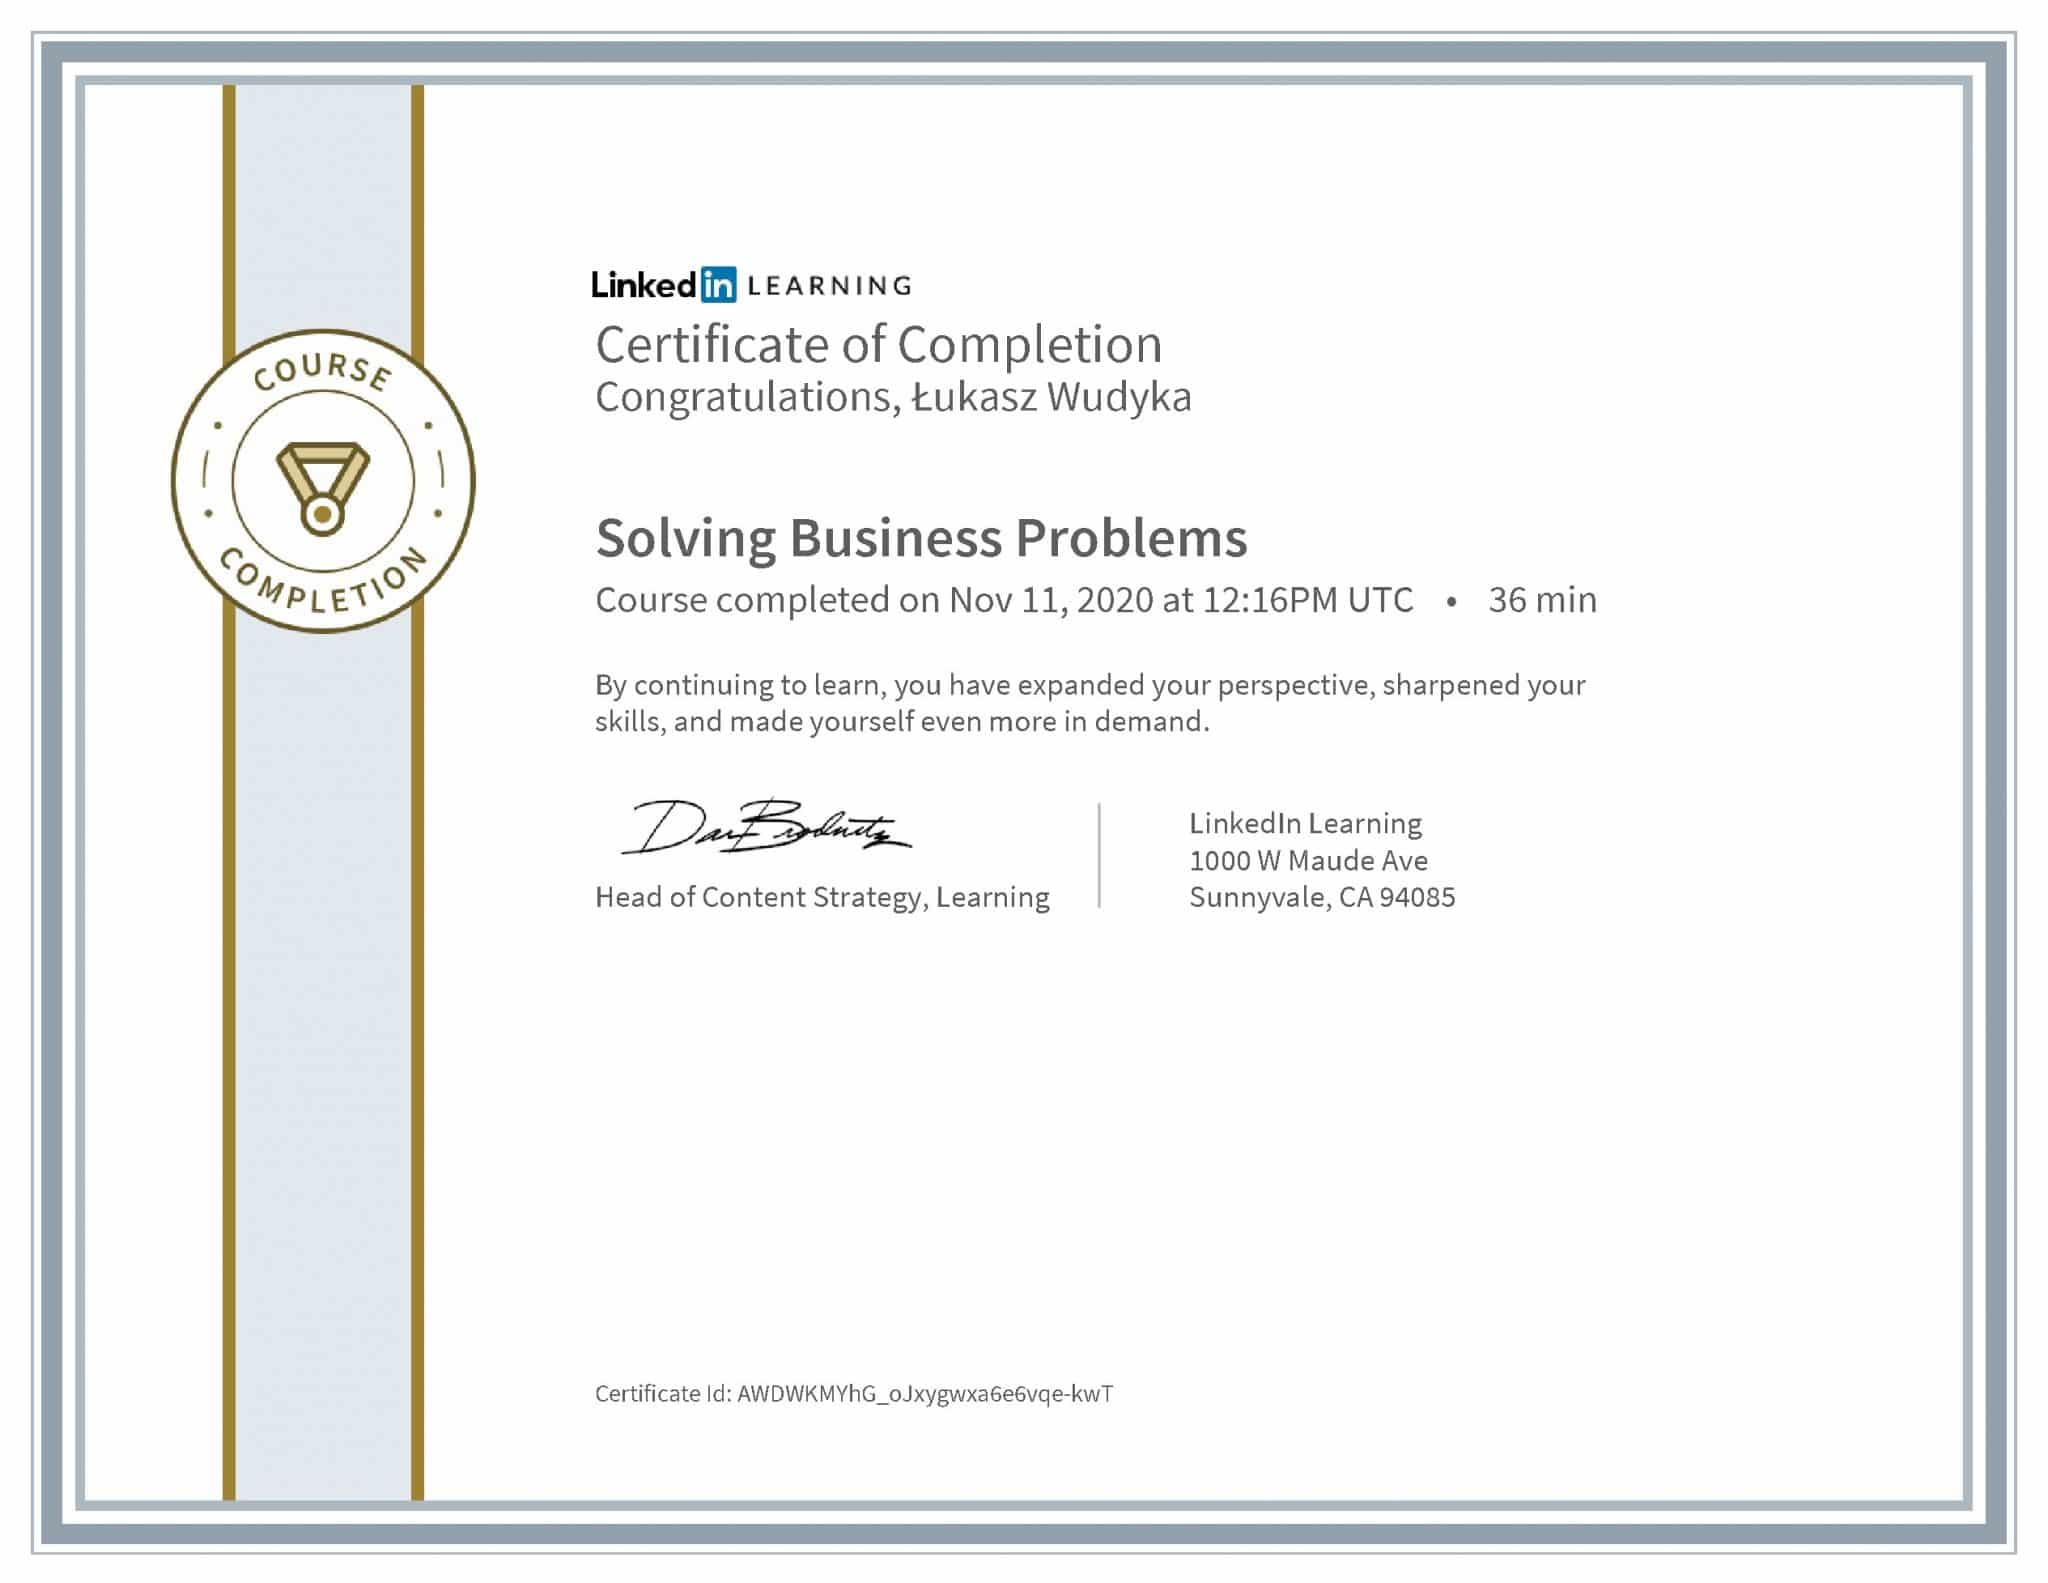 Łukasz Wudyka certyfikat LinkedIn Solving Business Problems